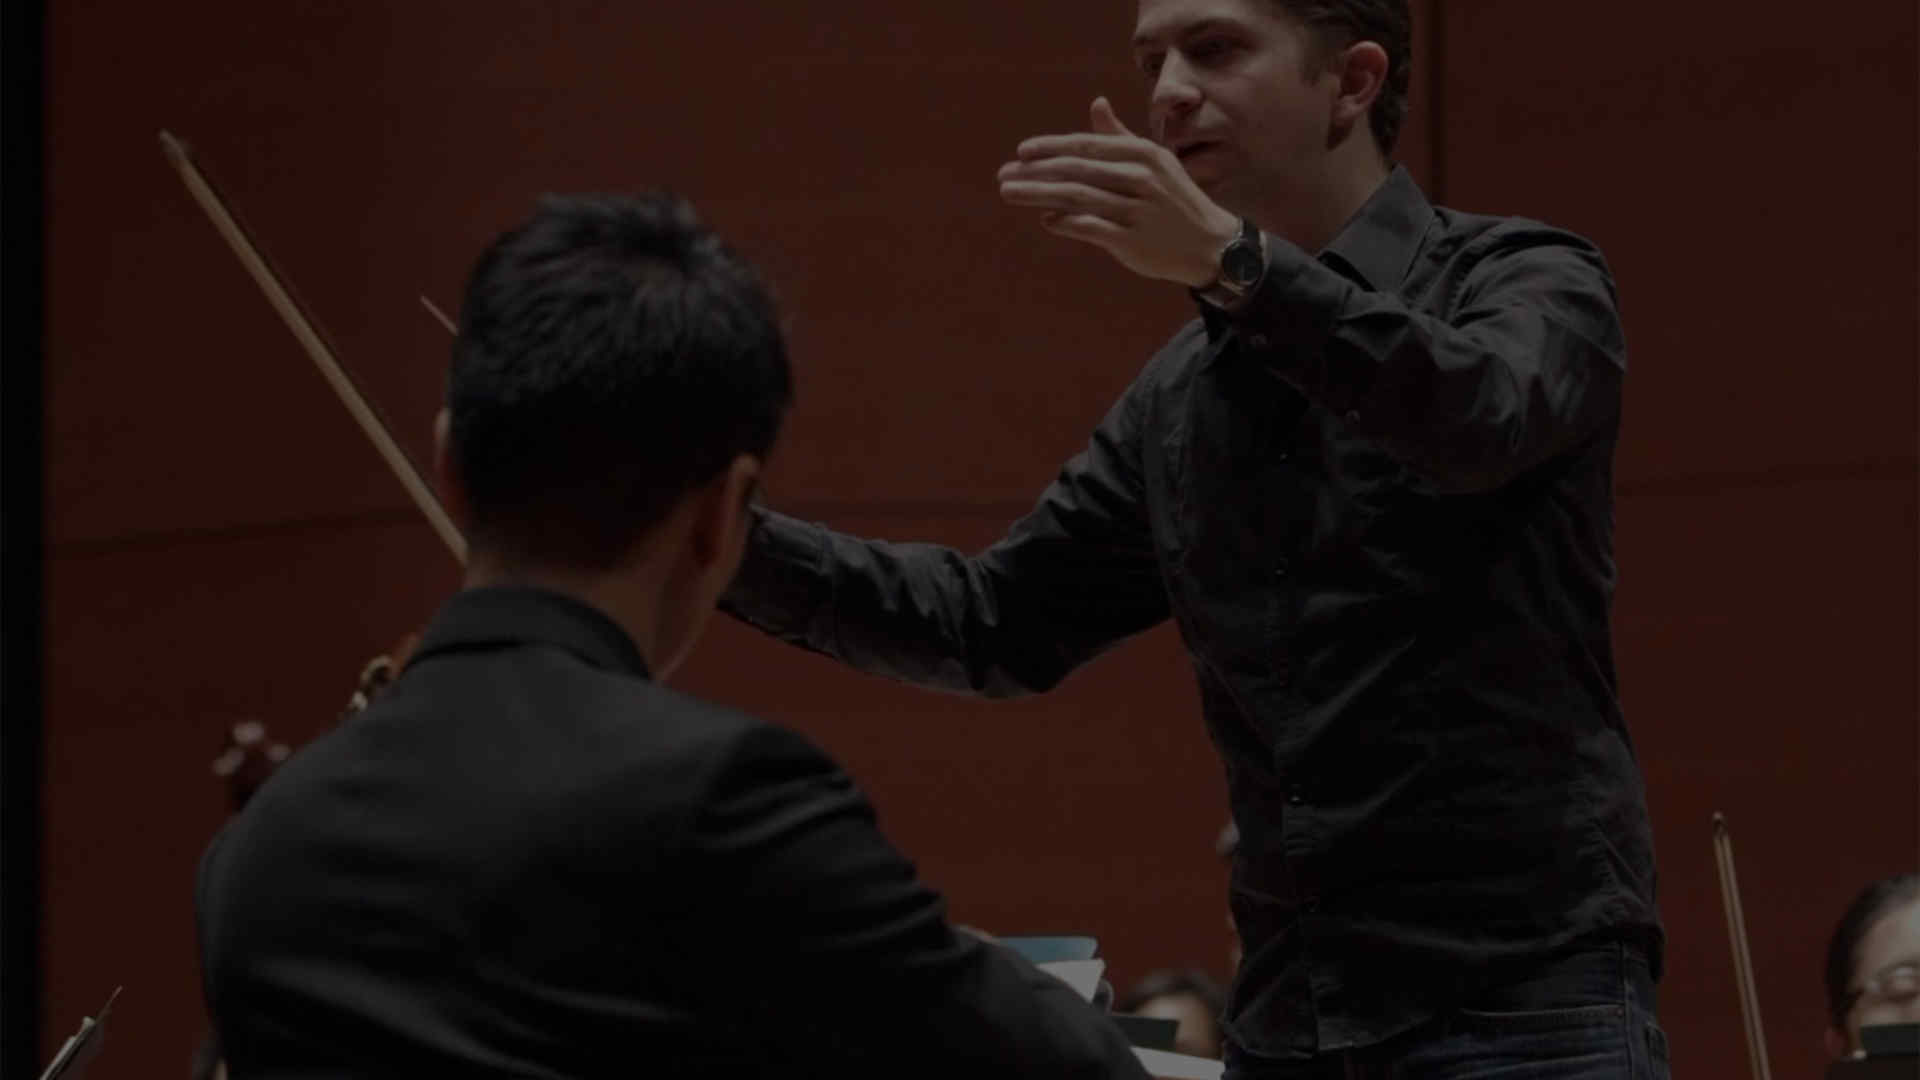 Juilliard orchestral conducting student Gregor Mayrhofer